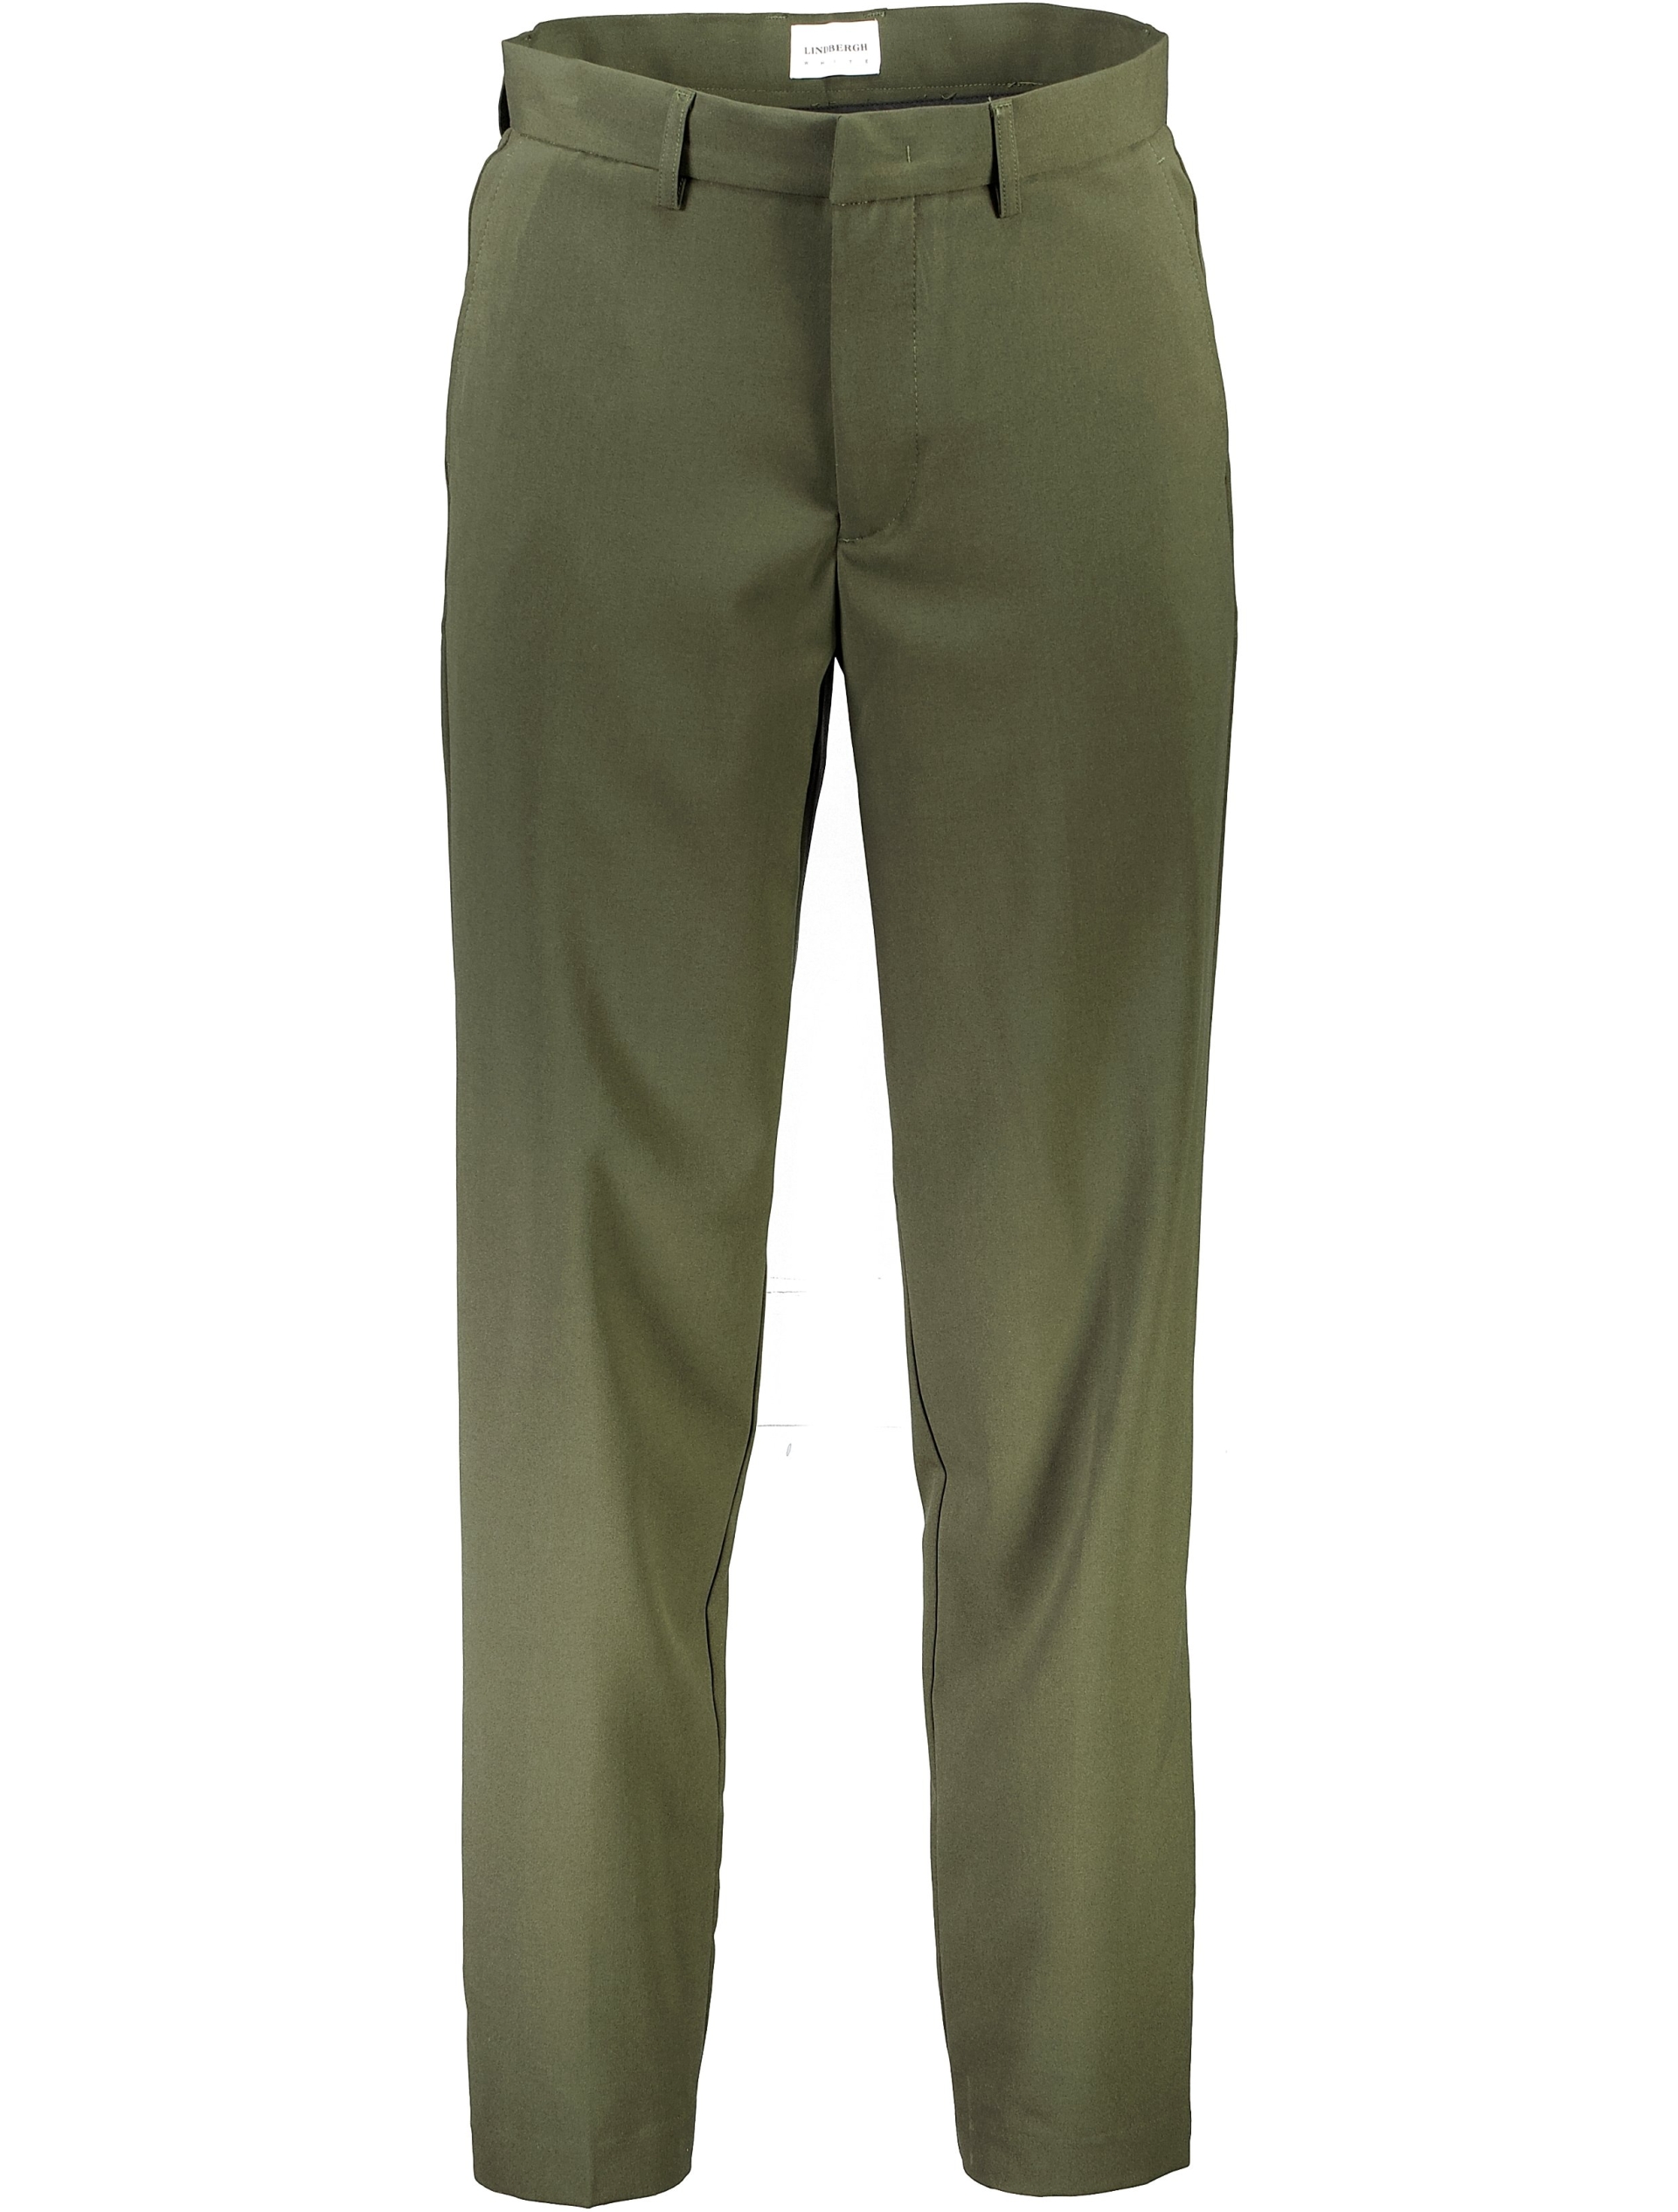 Lindbergh Classic trousers green / wood green